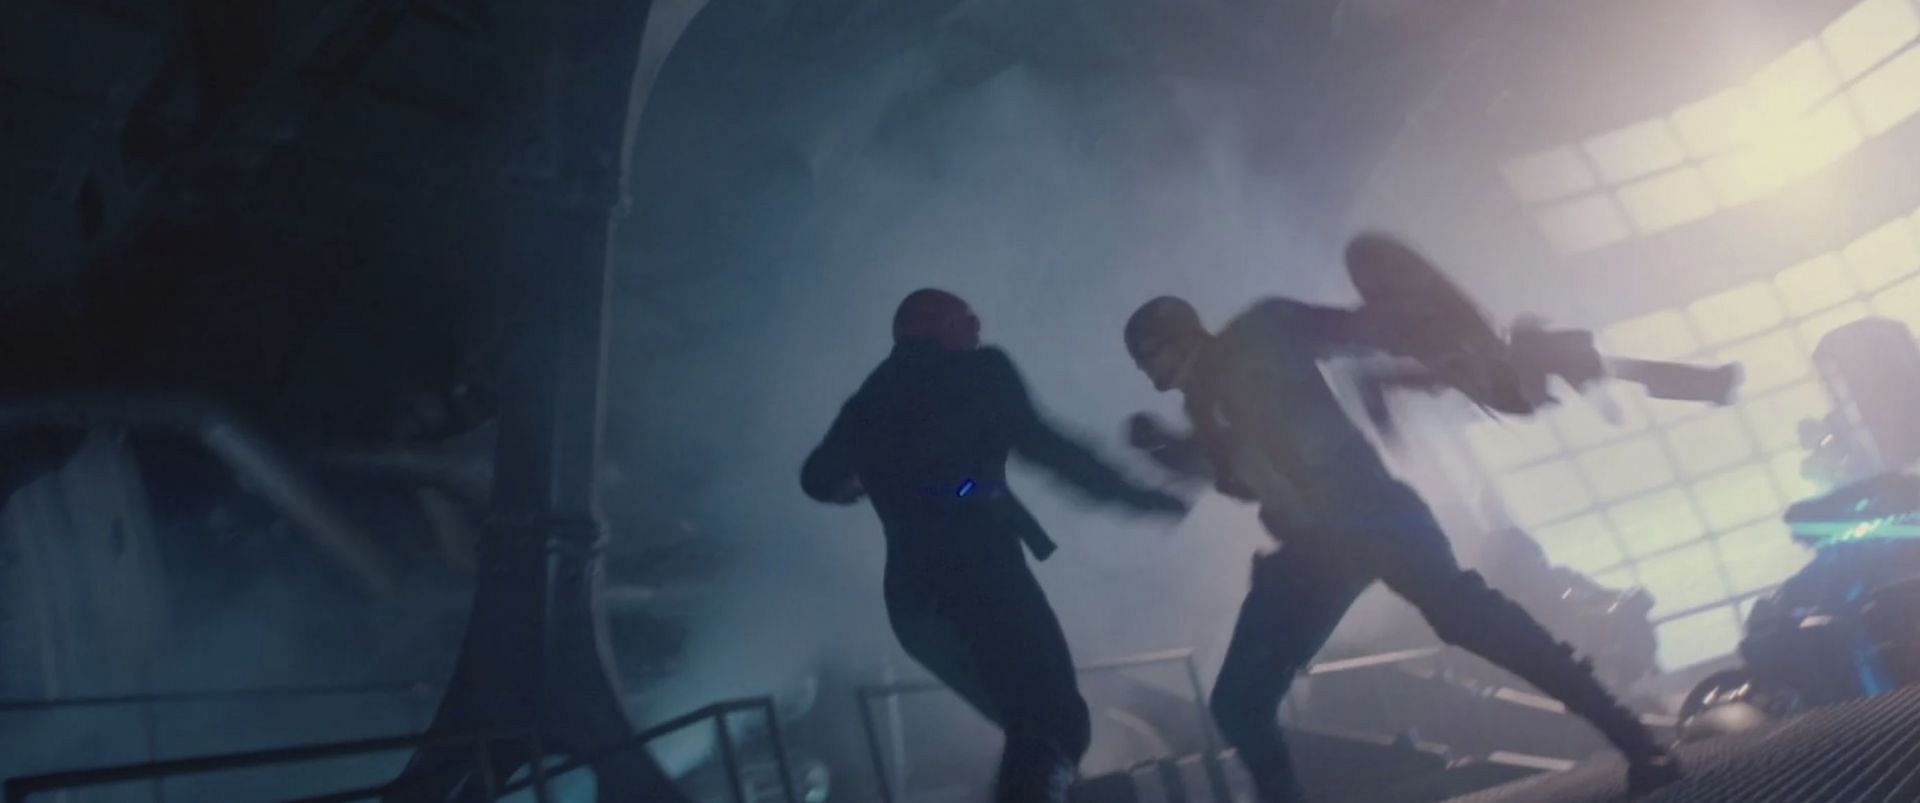 Captain America vs. Red Skull in an intense fight scene (Image via Marvel Studios)